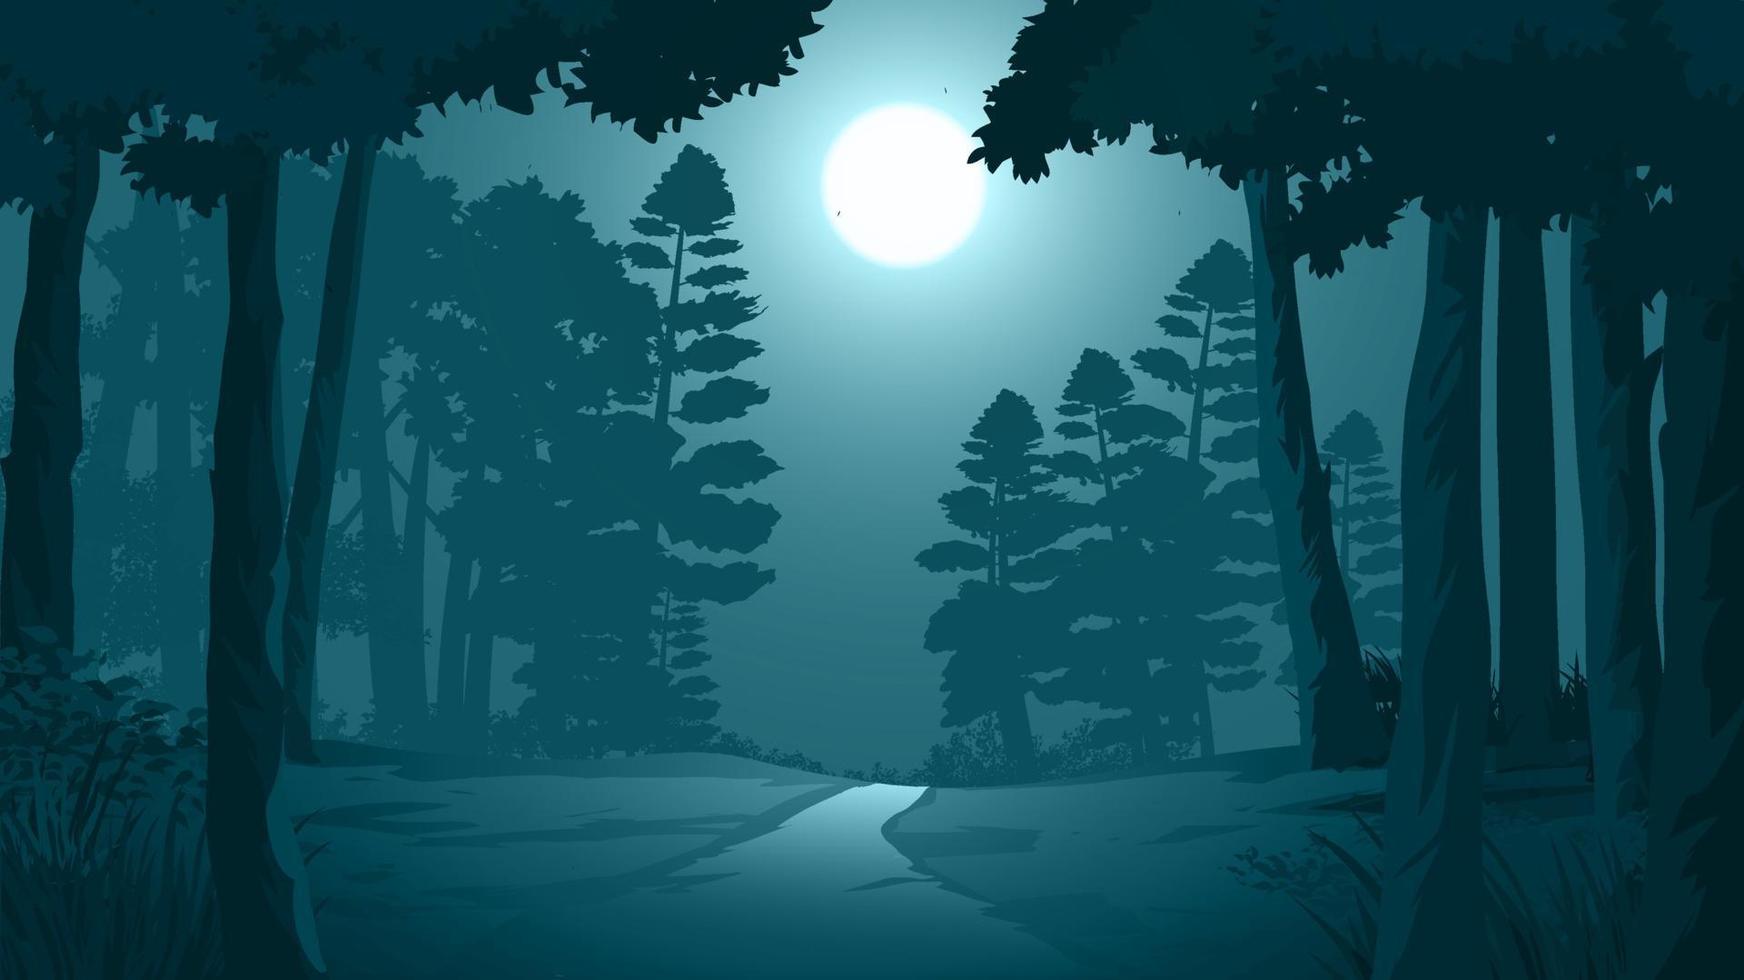 Pathway through dark forest illustration with moonlight vector